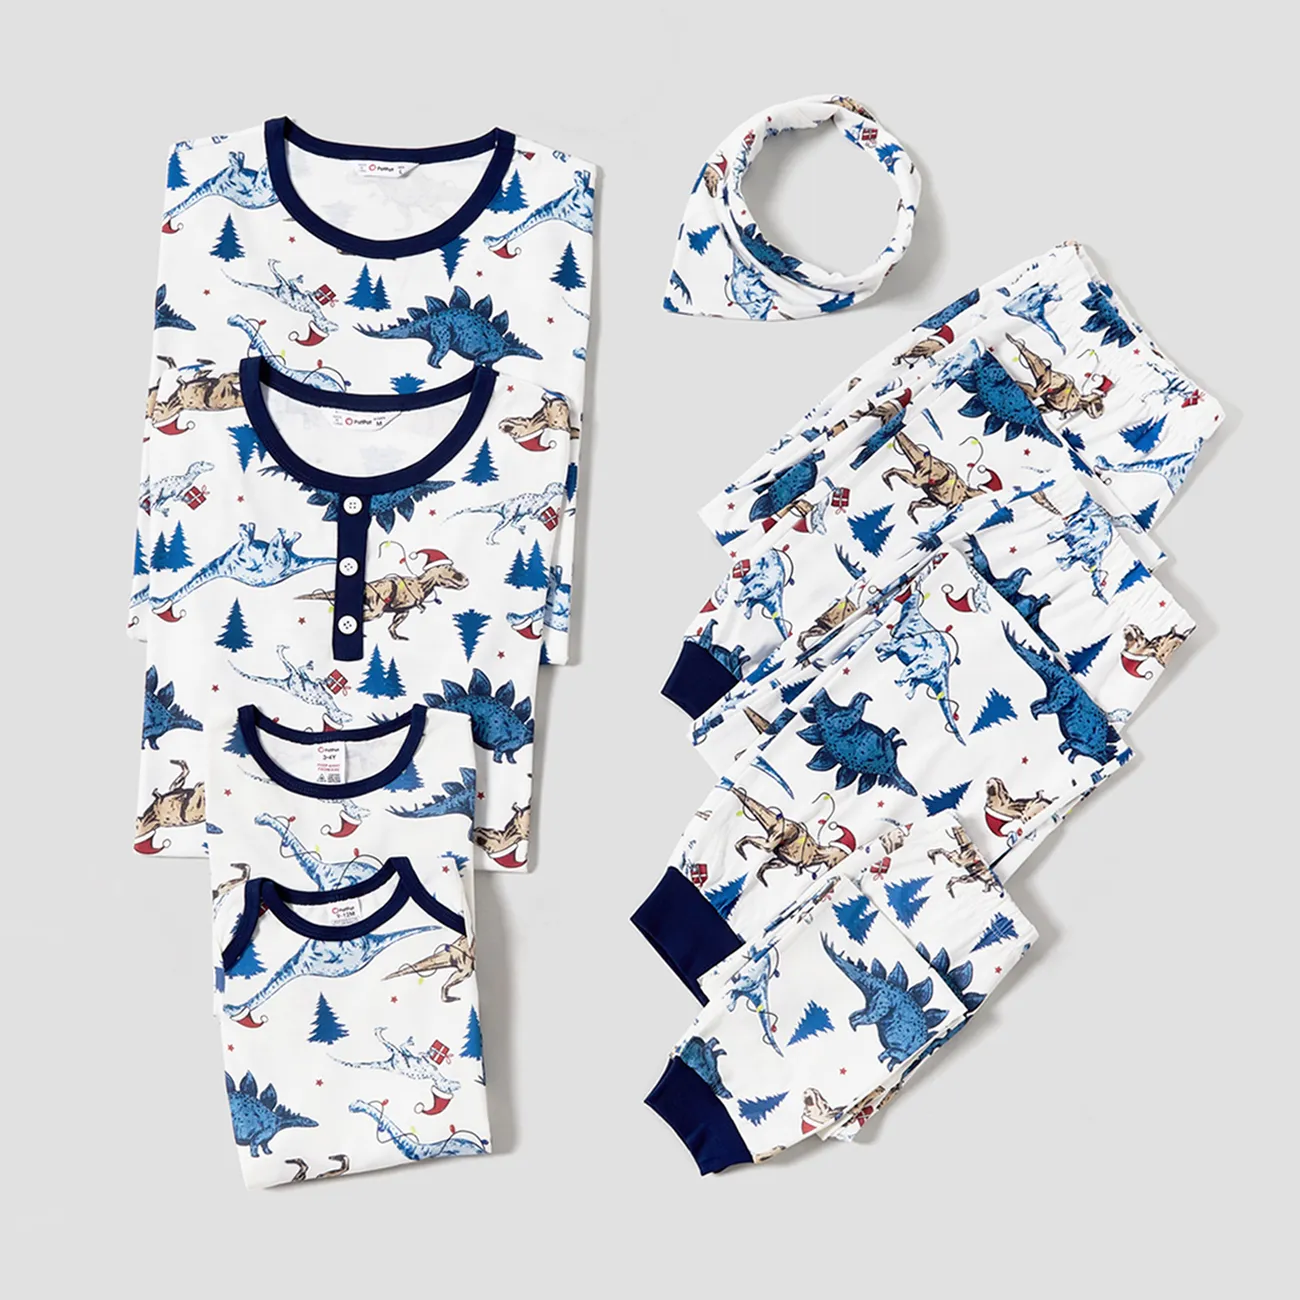 Natal Look de família Dinossauro Manga comprida Conjuntos de roupa para a família Pijamas (Flame Resistant) Azul big image 1